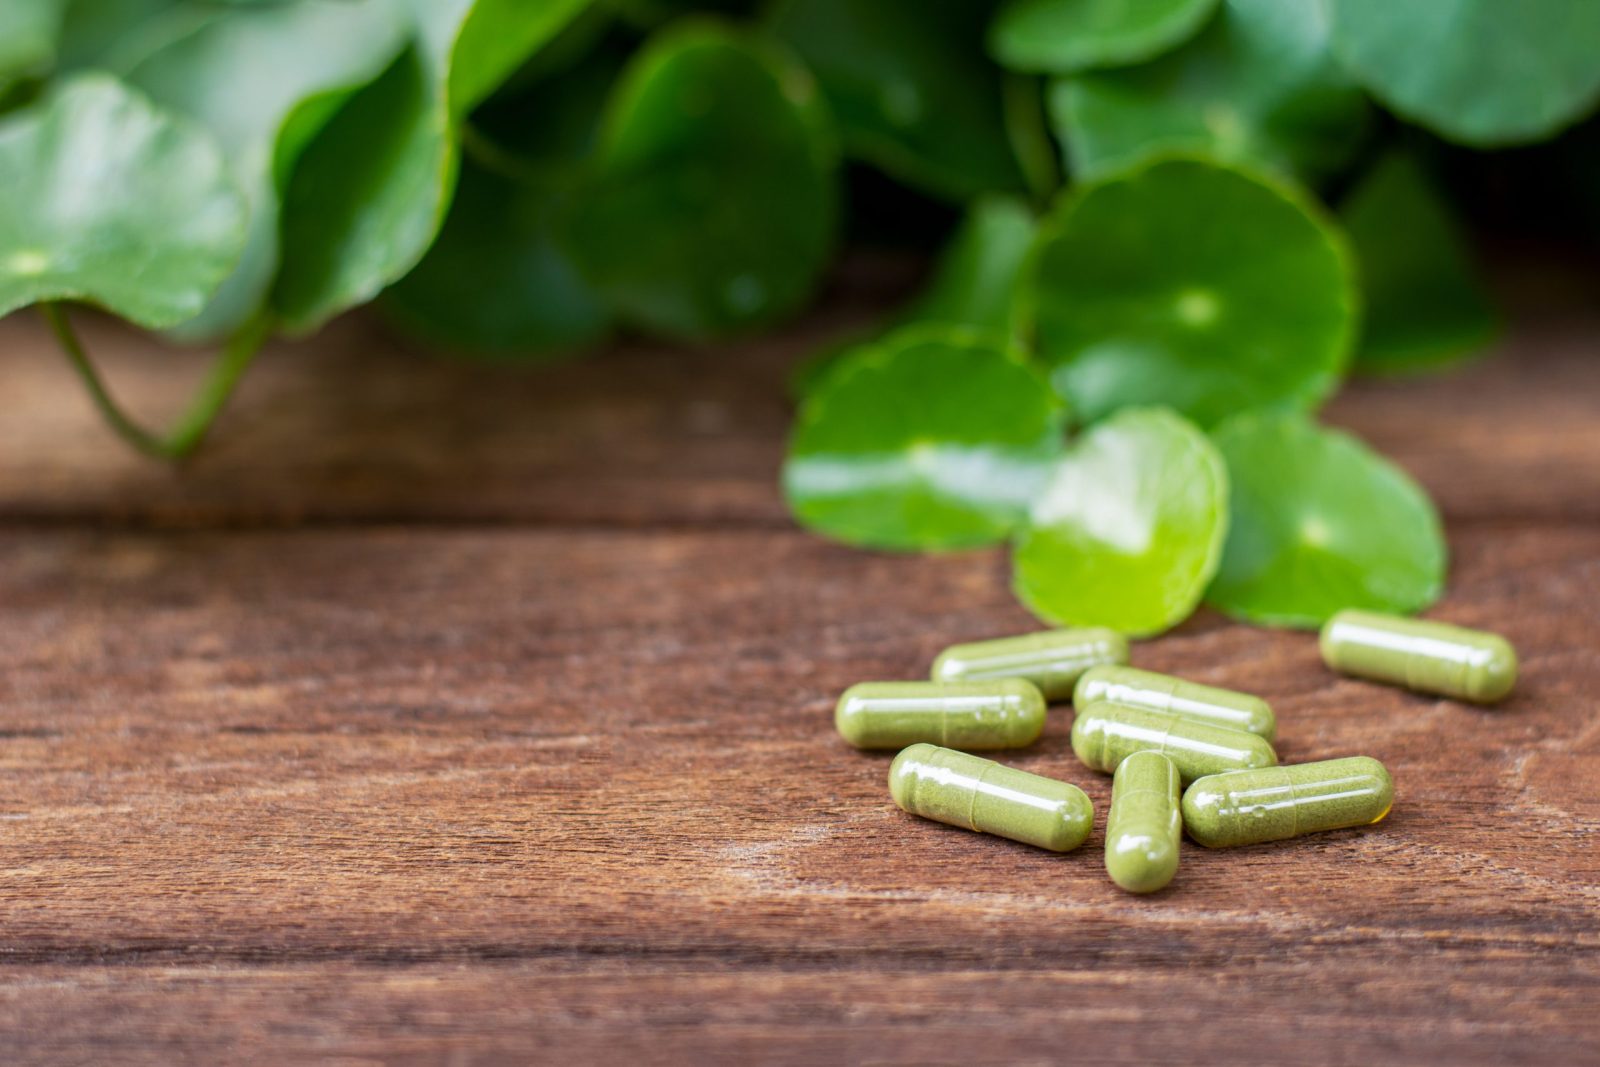 green supplement pills on a wooden table